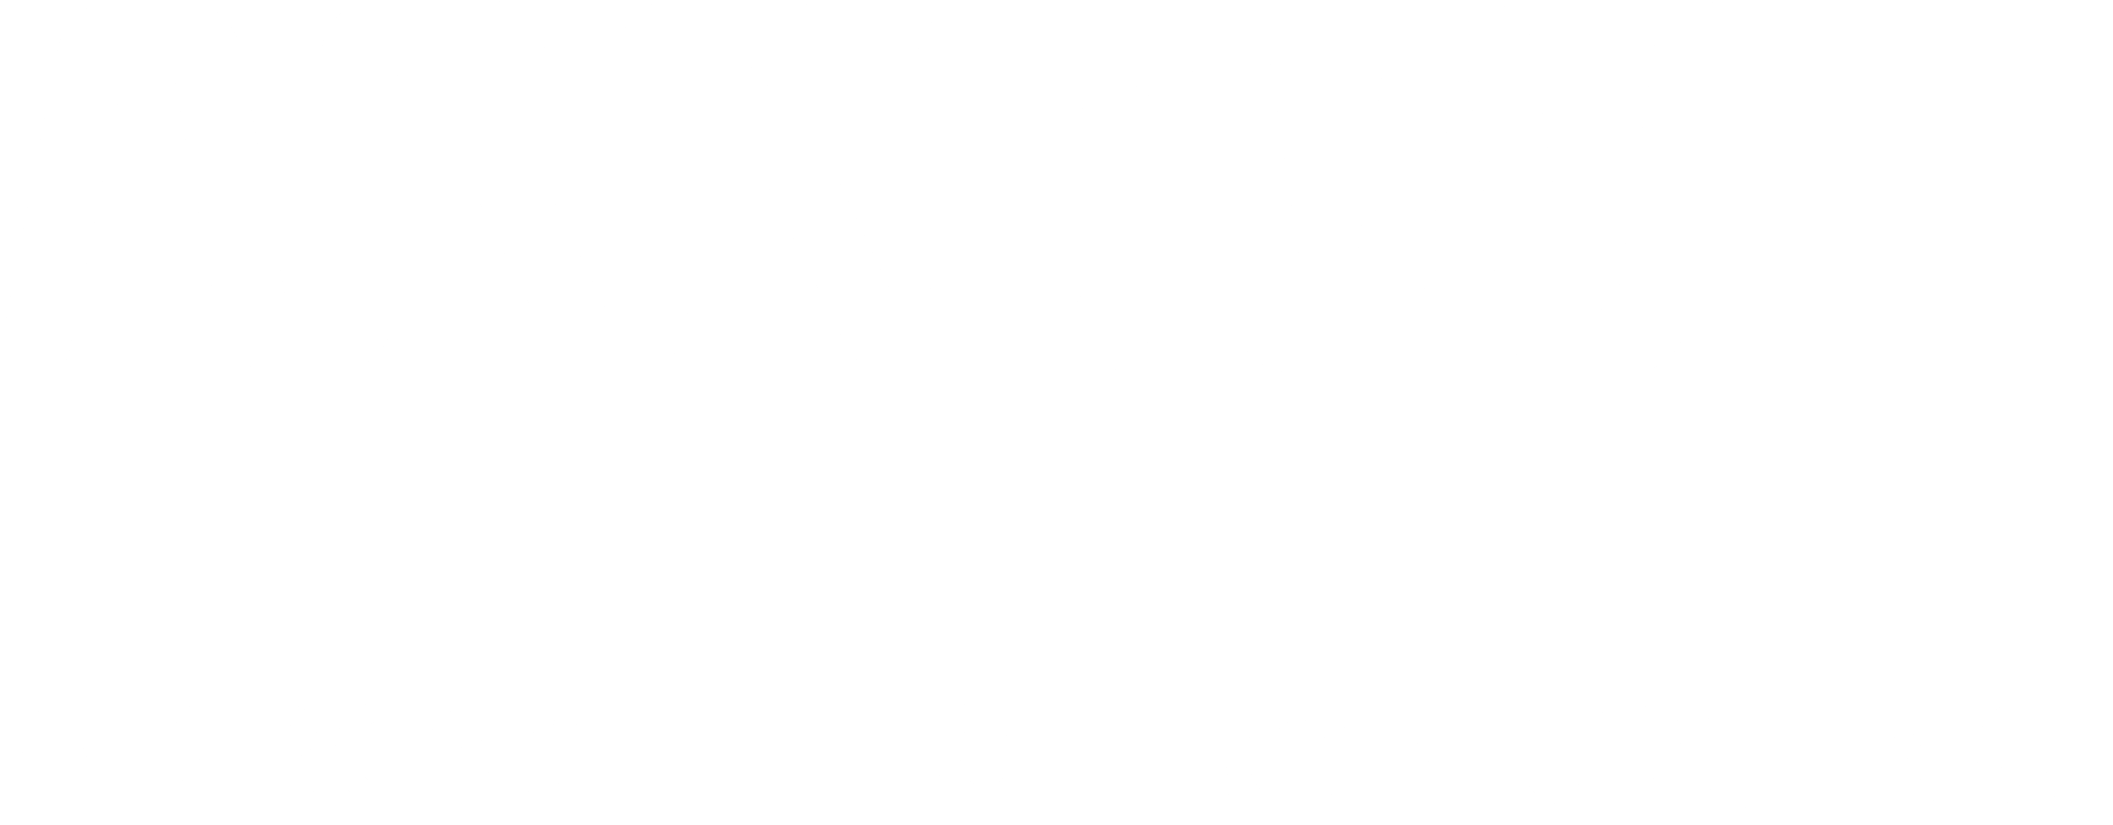 Arrow Electronics 01 Logo Black And White Focus